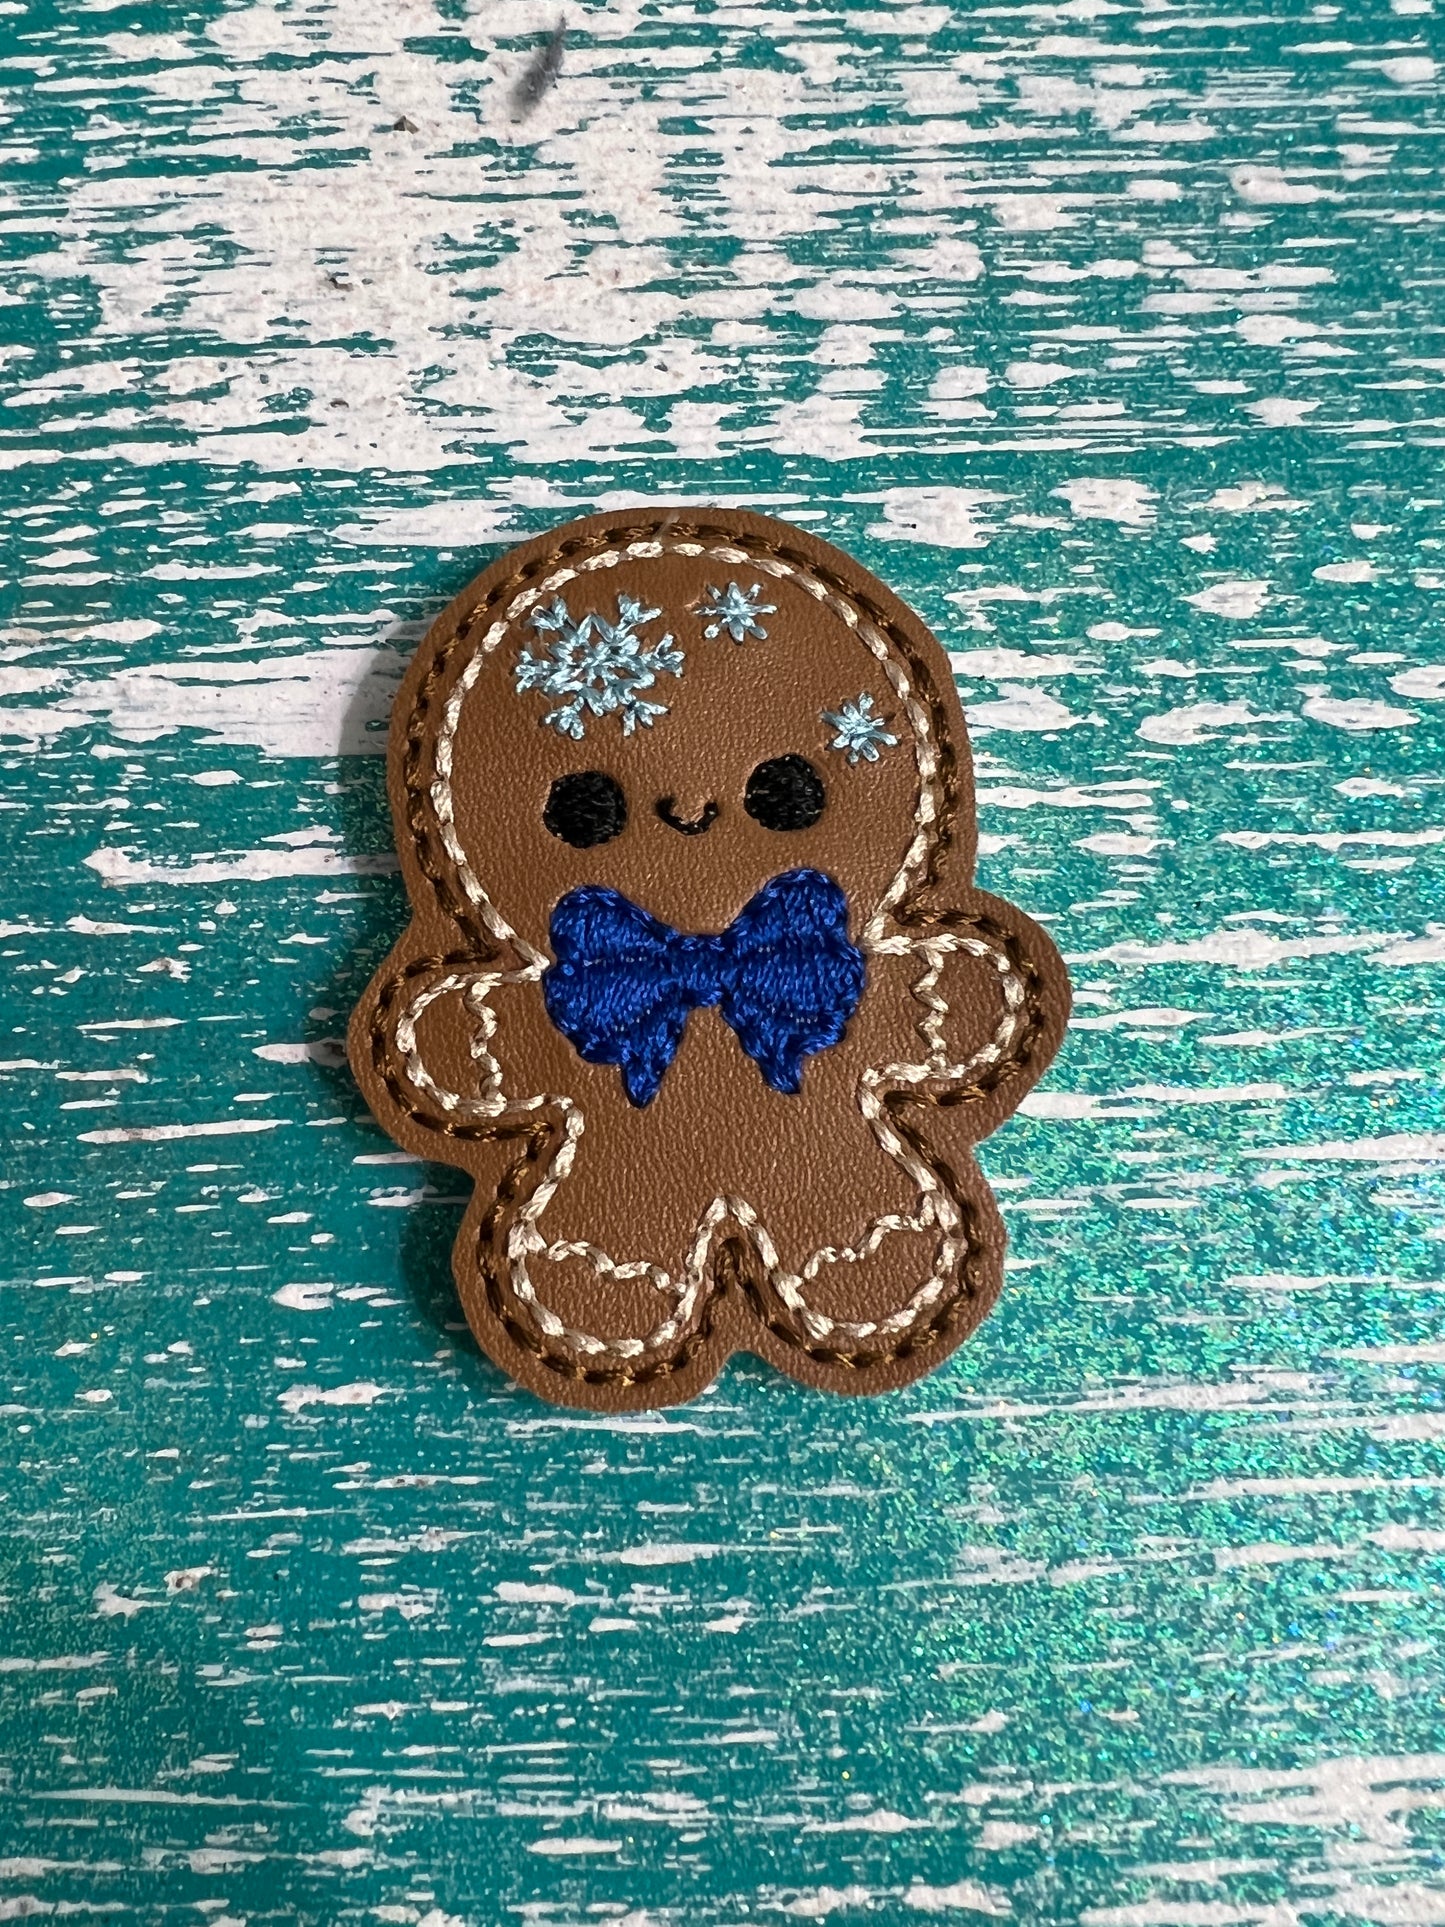 Snow flake gingerbread man